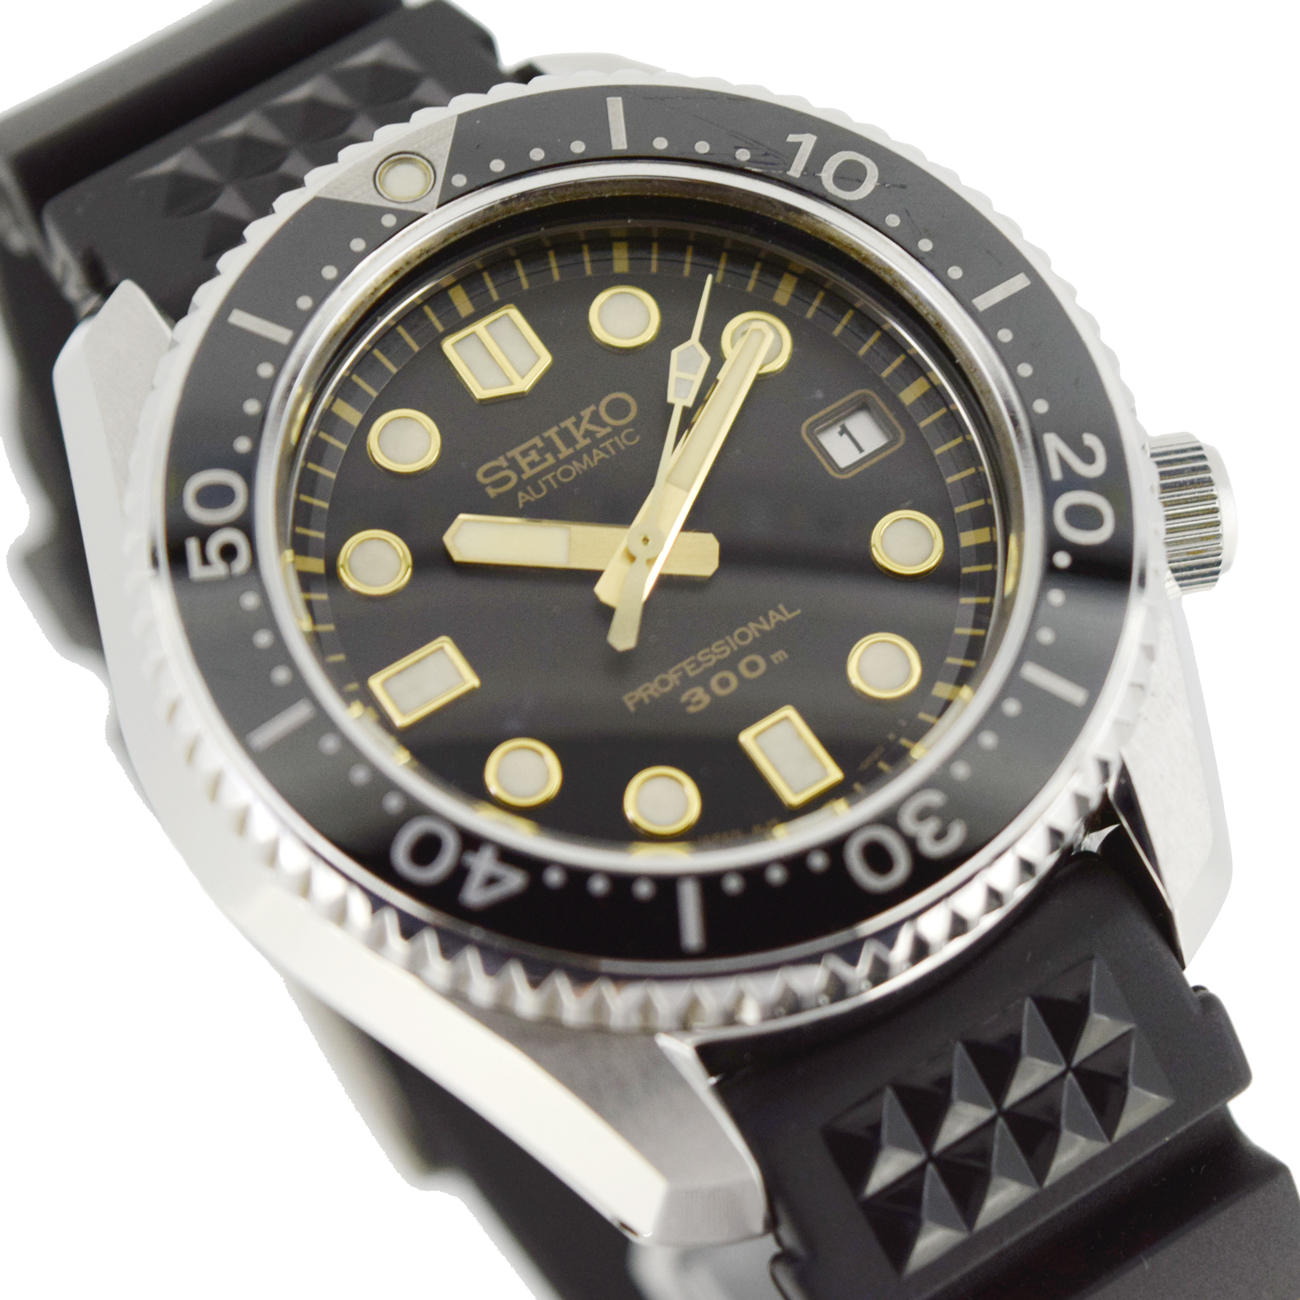 SEIKO SBDX003 ヒストリカルコレクション 500本限定 8L35-0020 腕時計 SS ラバー メンズ